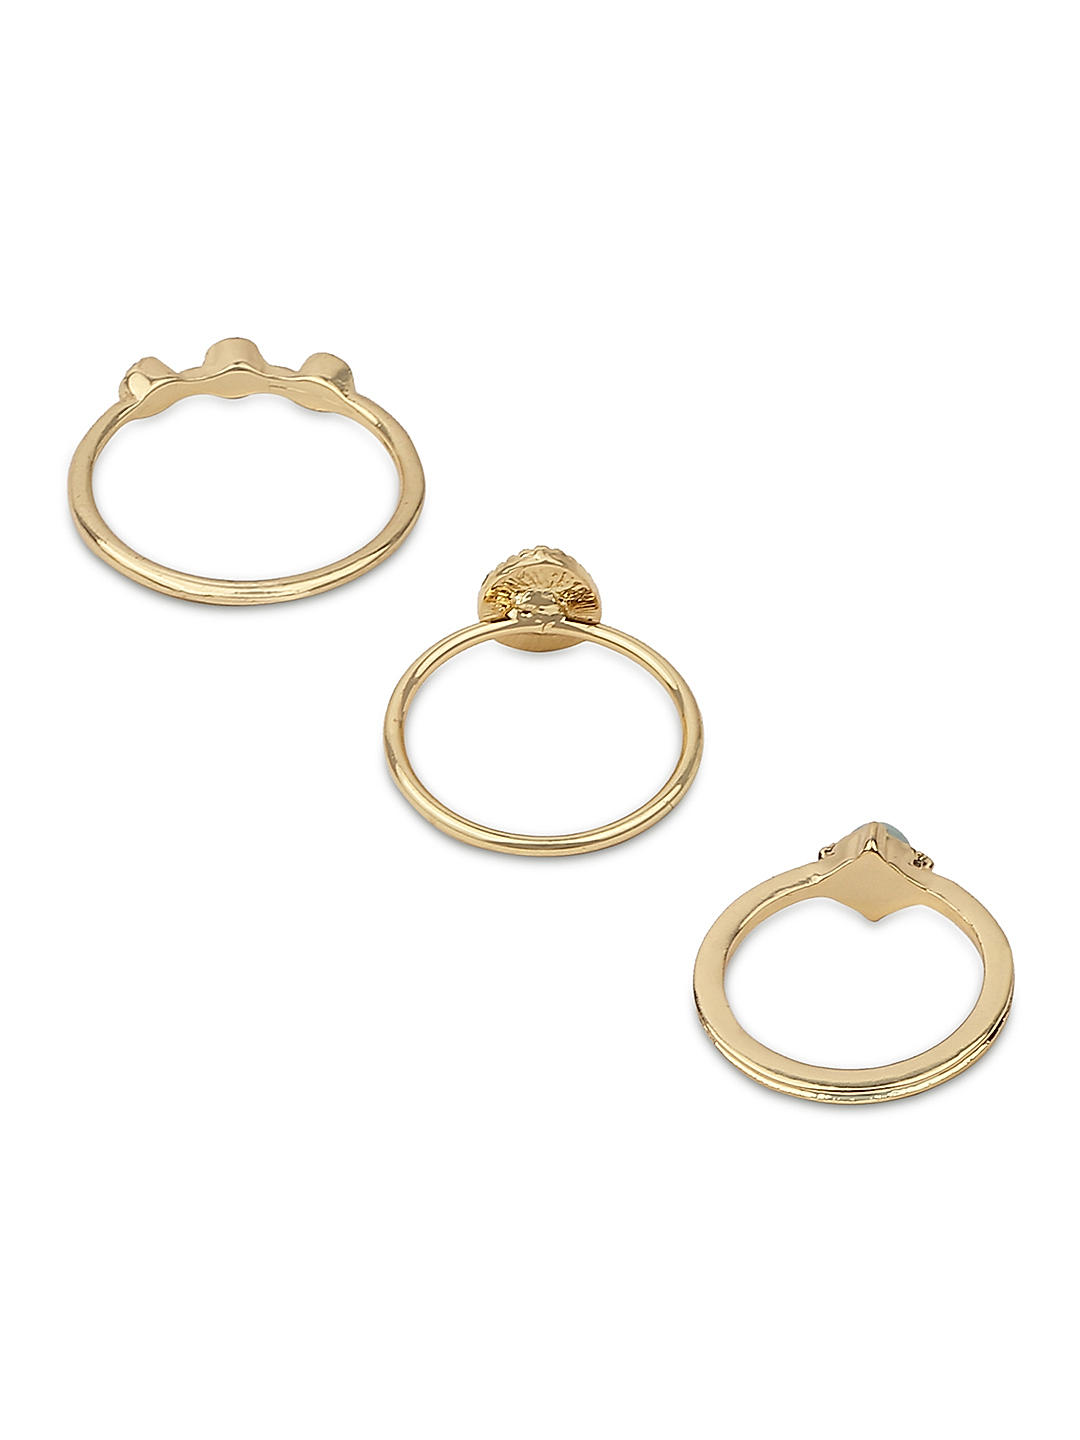 vks trading FINGER RING Gold Plated Non Adjustable PACK OF 3-044 Brass Ring  Price in India - Buy vks trading FINGER RING Gold Plated Non Adjustable  PACK OF 3-044 Brass Ring Online